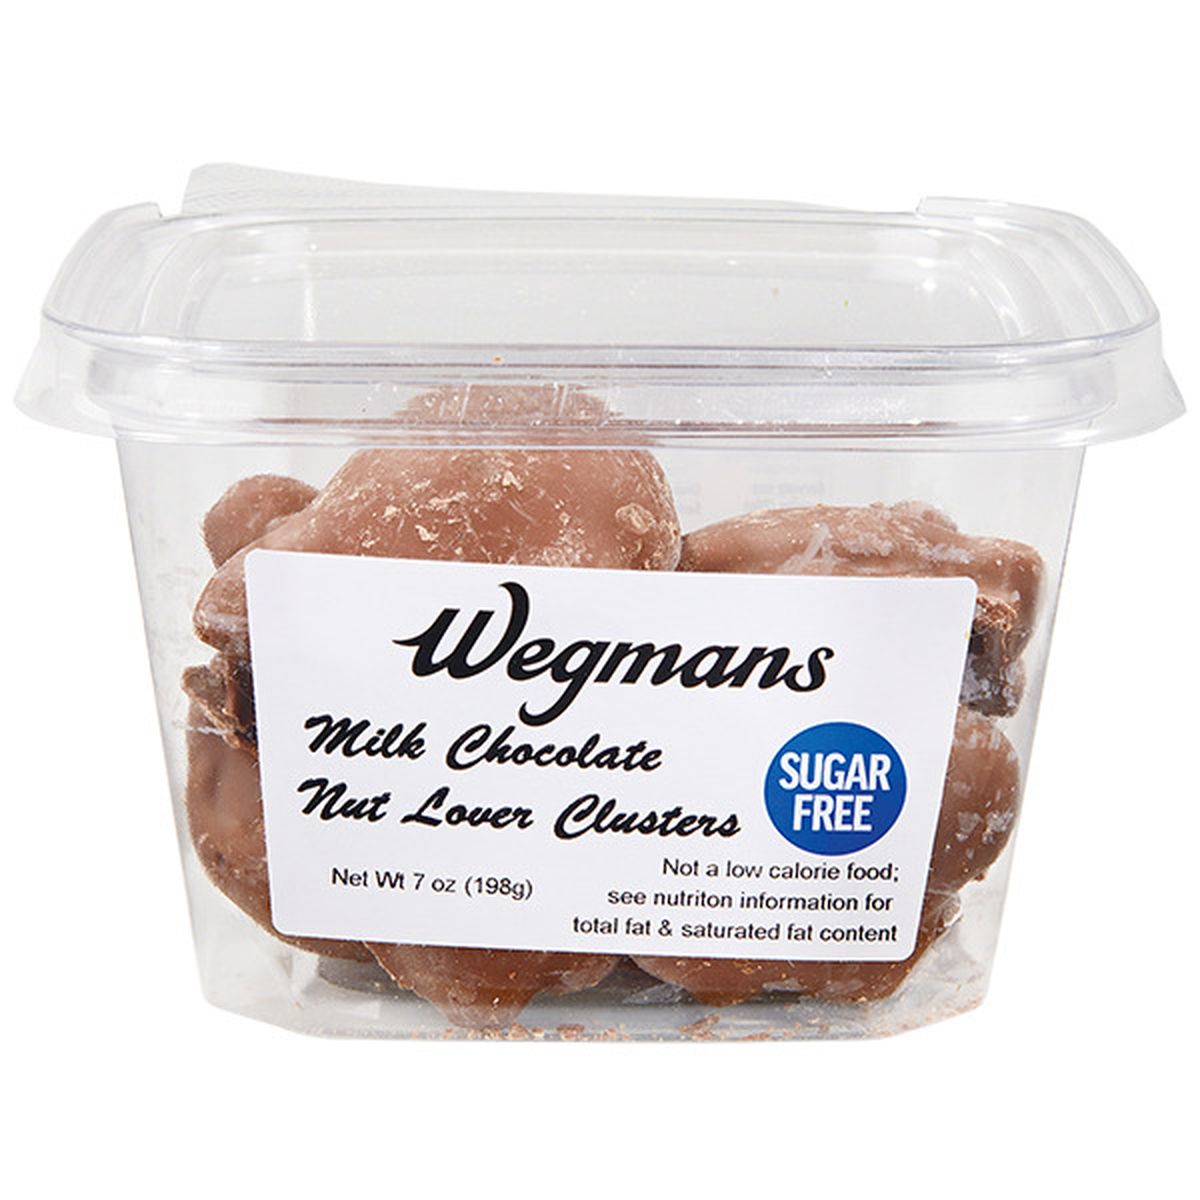 Calories in Wegmans Sugar Free Milk Chocolate Nut Lover Clusters